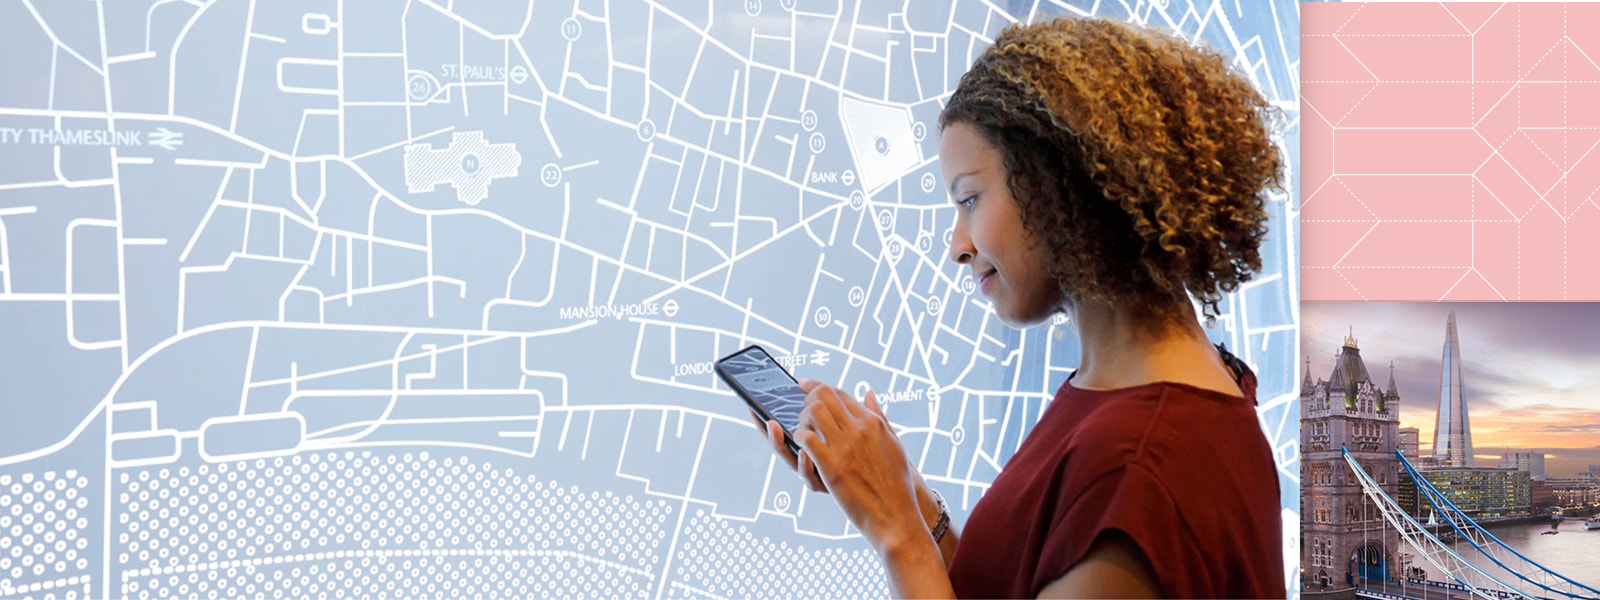 Una mujer usa un dispositivo móvil frente a una pantalla con un mapa